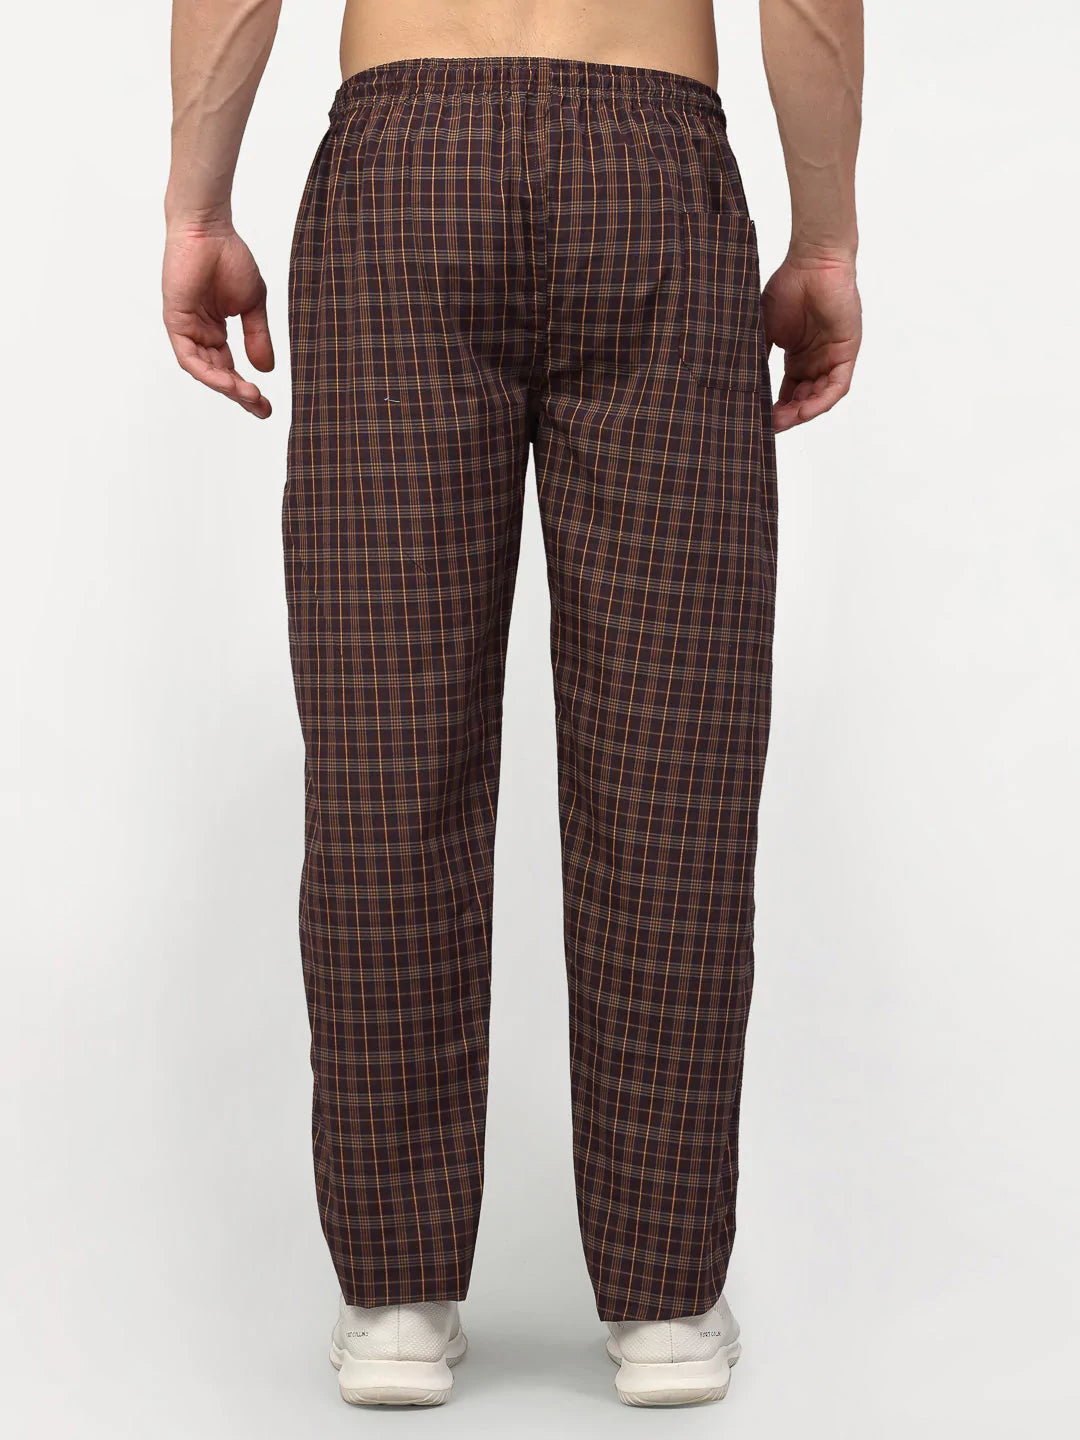 Jainish Men's Brown Cotton Checked Track Pants ( JOG 015Brown )